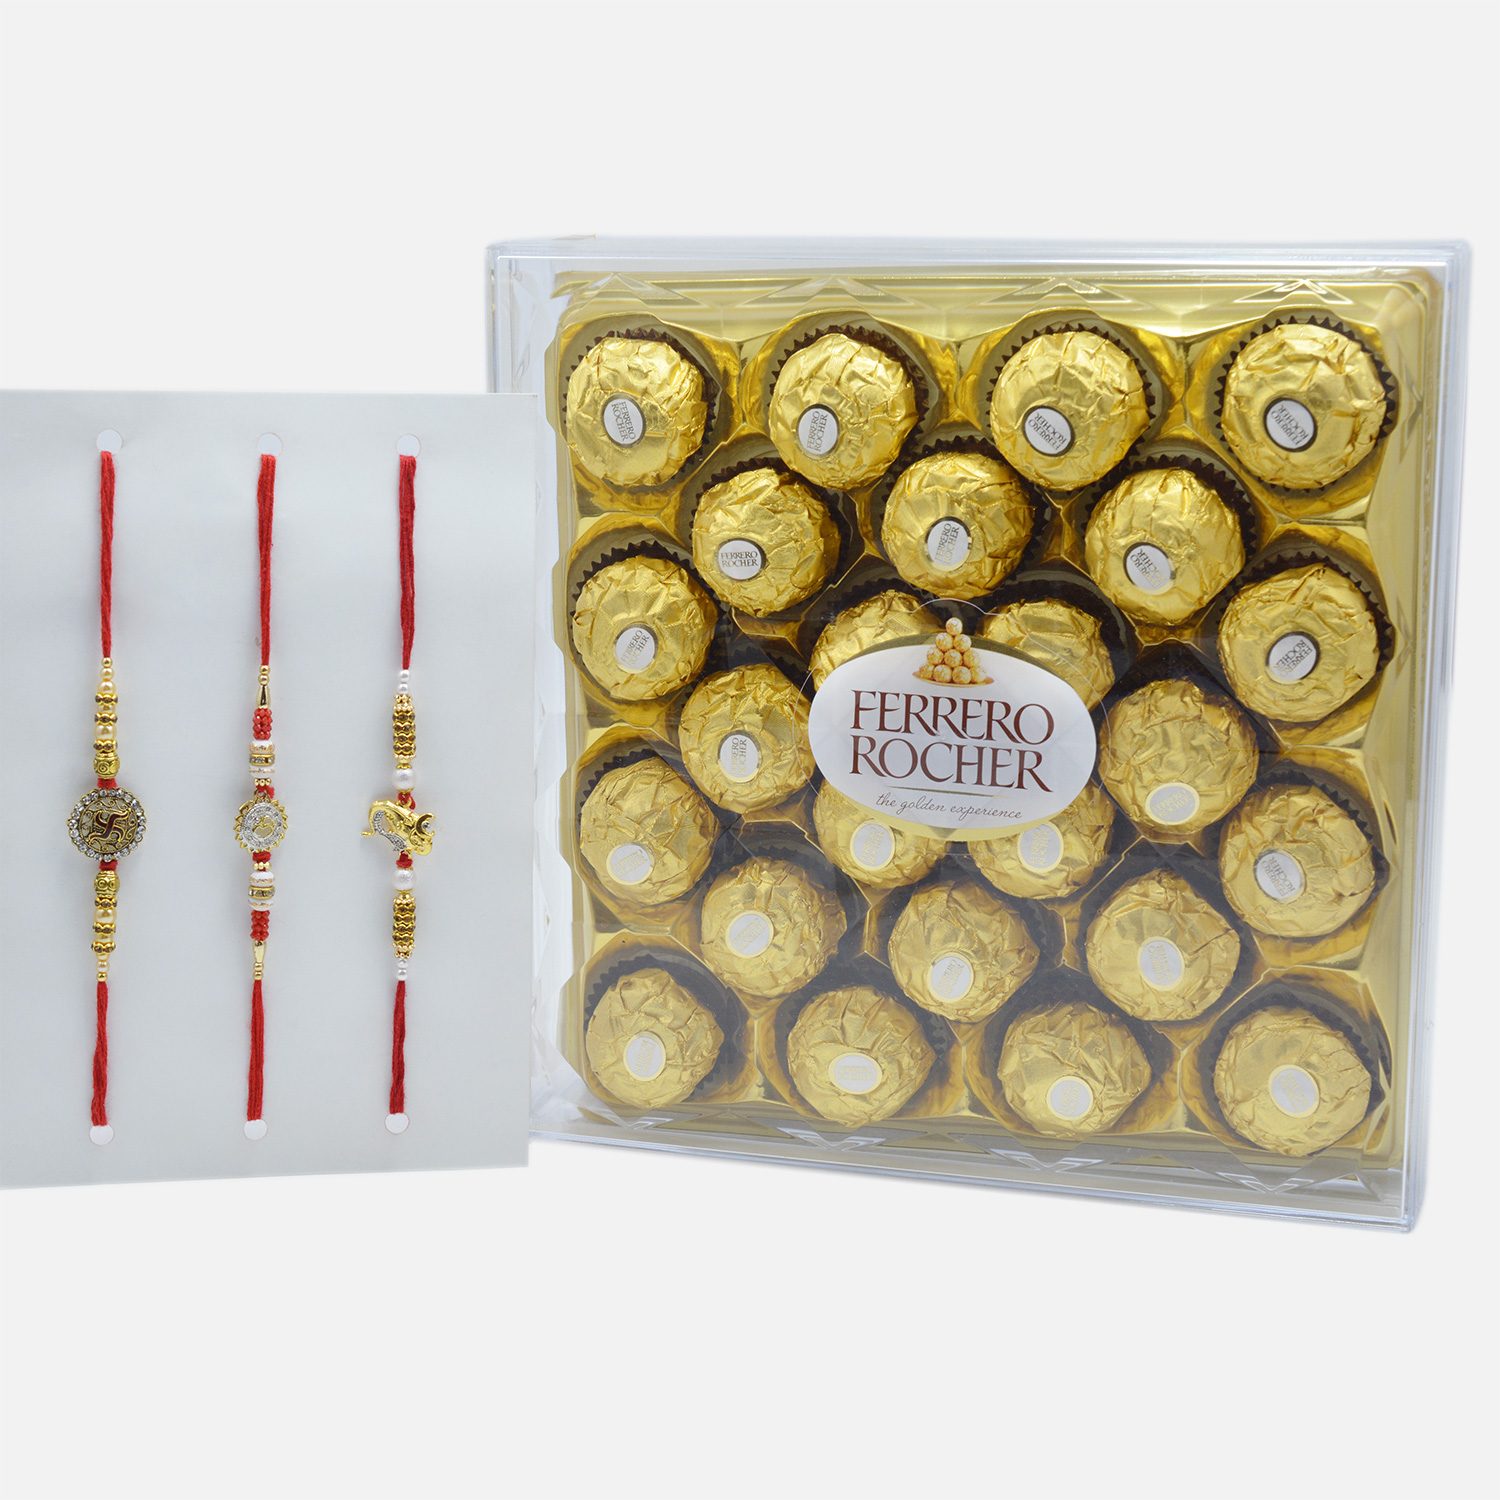 Auspicious Rakhi Set of 3 with 24 pcs Tempting Ferrero Rocher